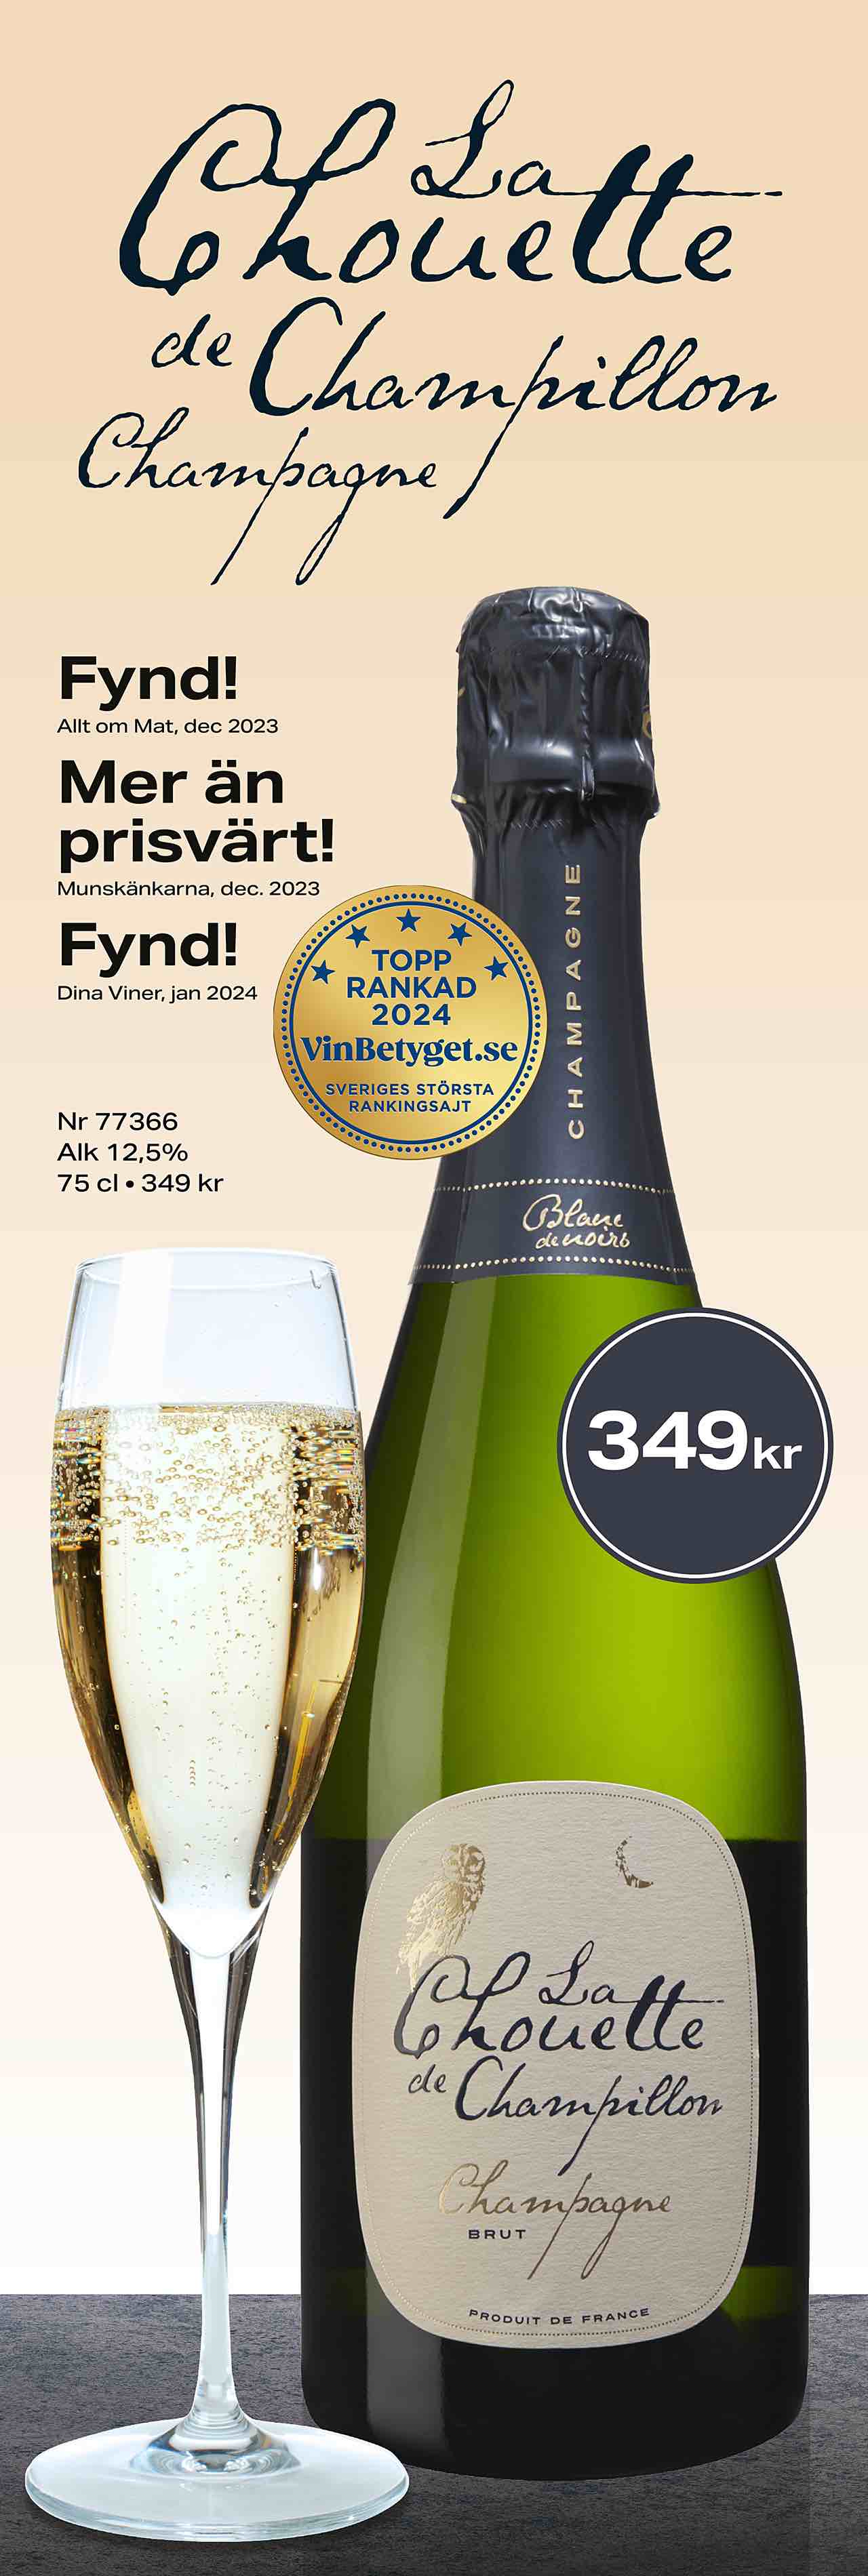 Bra champagne med bra pris: La Chouette 349 kr 